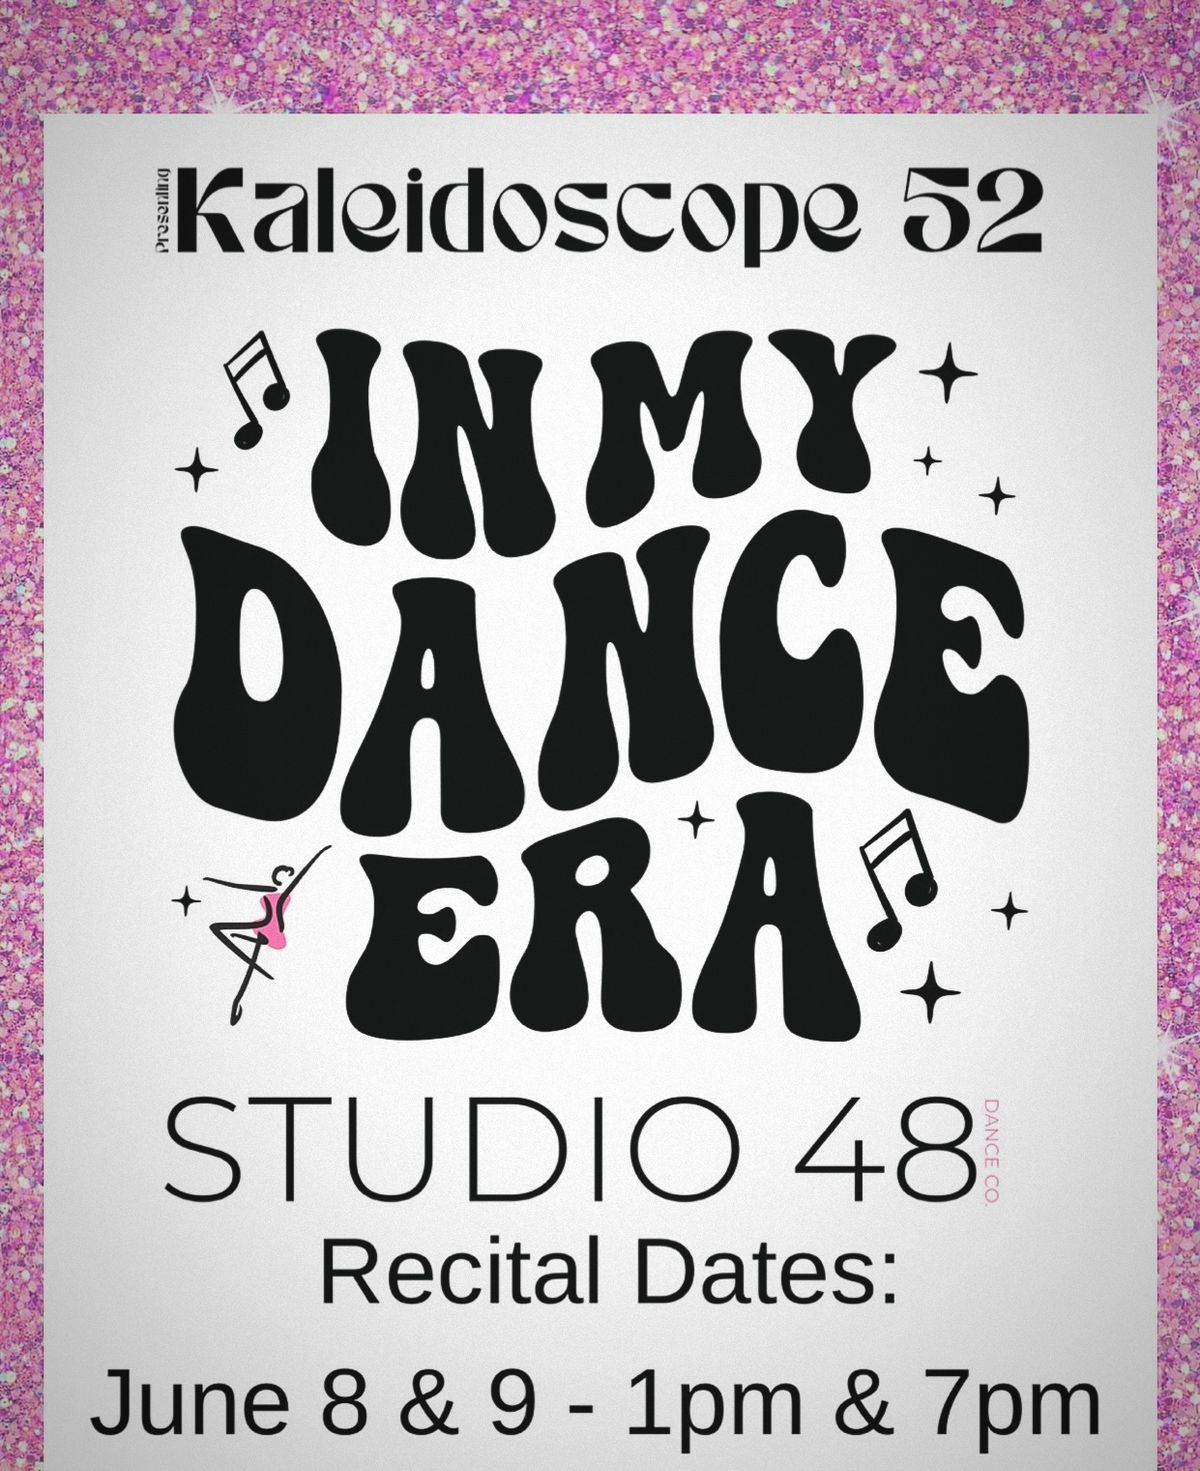 Studio 48 Dance Co. Presents: Kaleidoscope 52